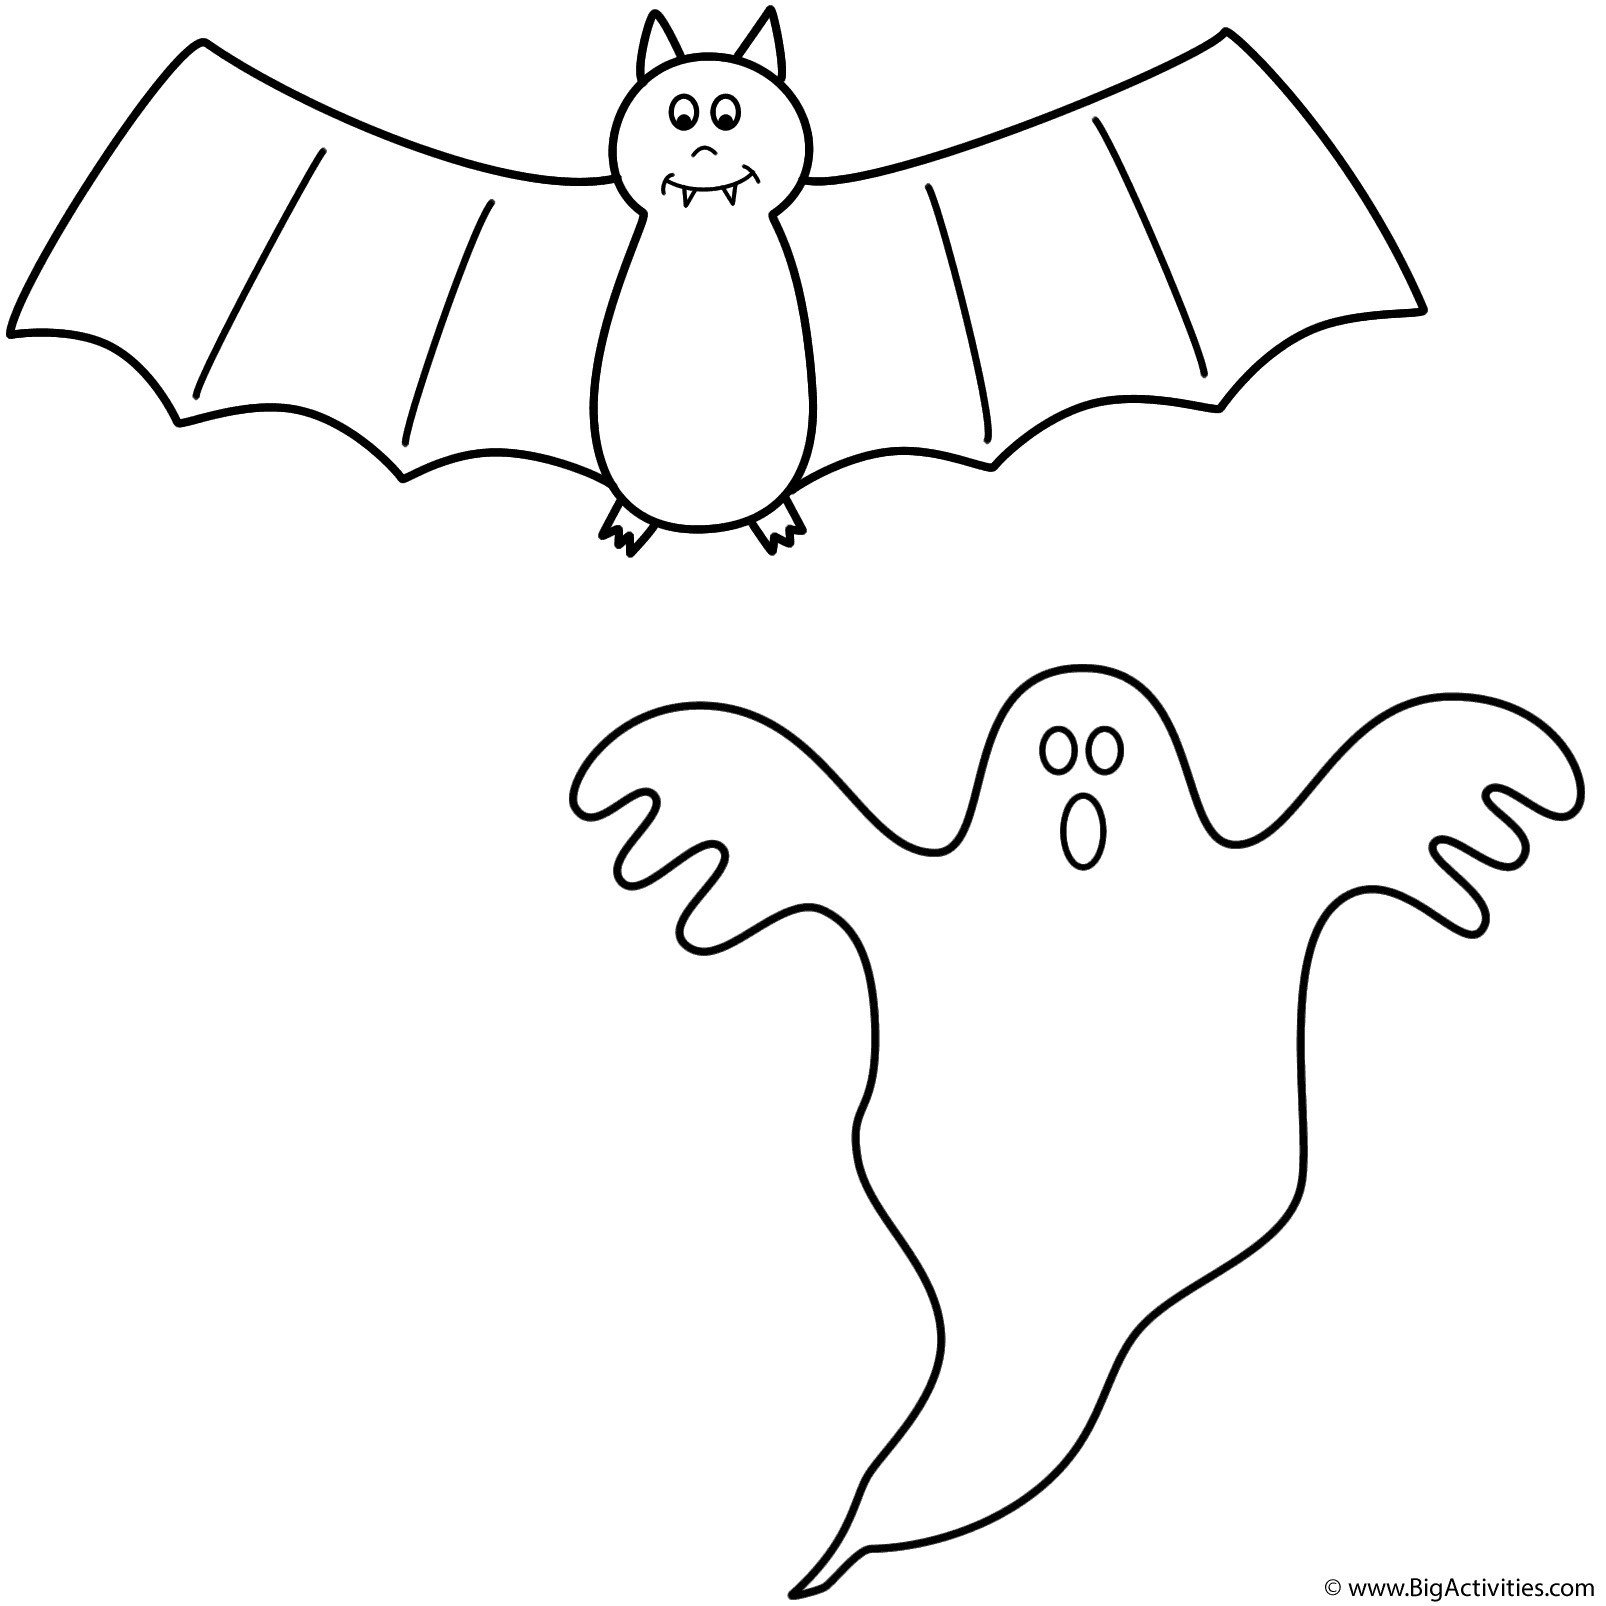 Bat Coloring Pages Preschool at GetColorings.com | Free printable